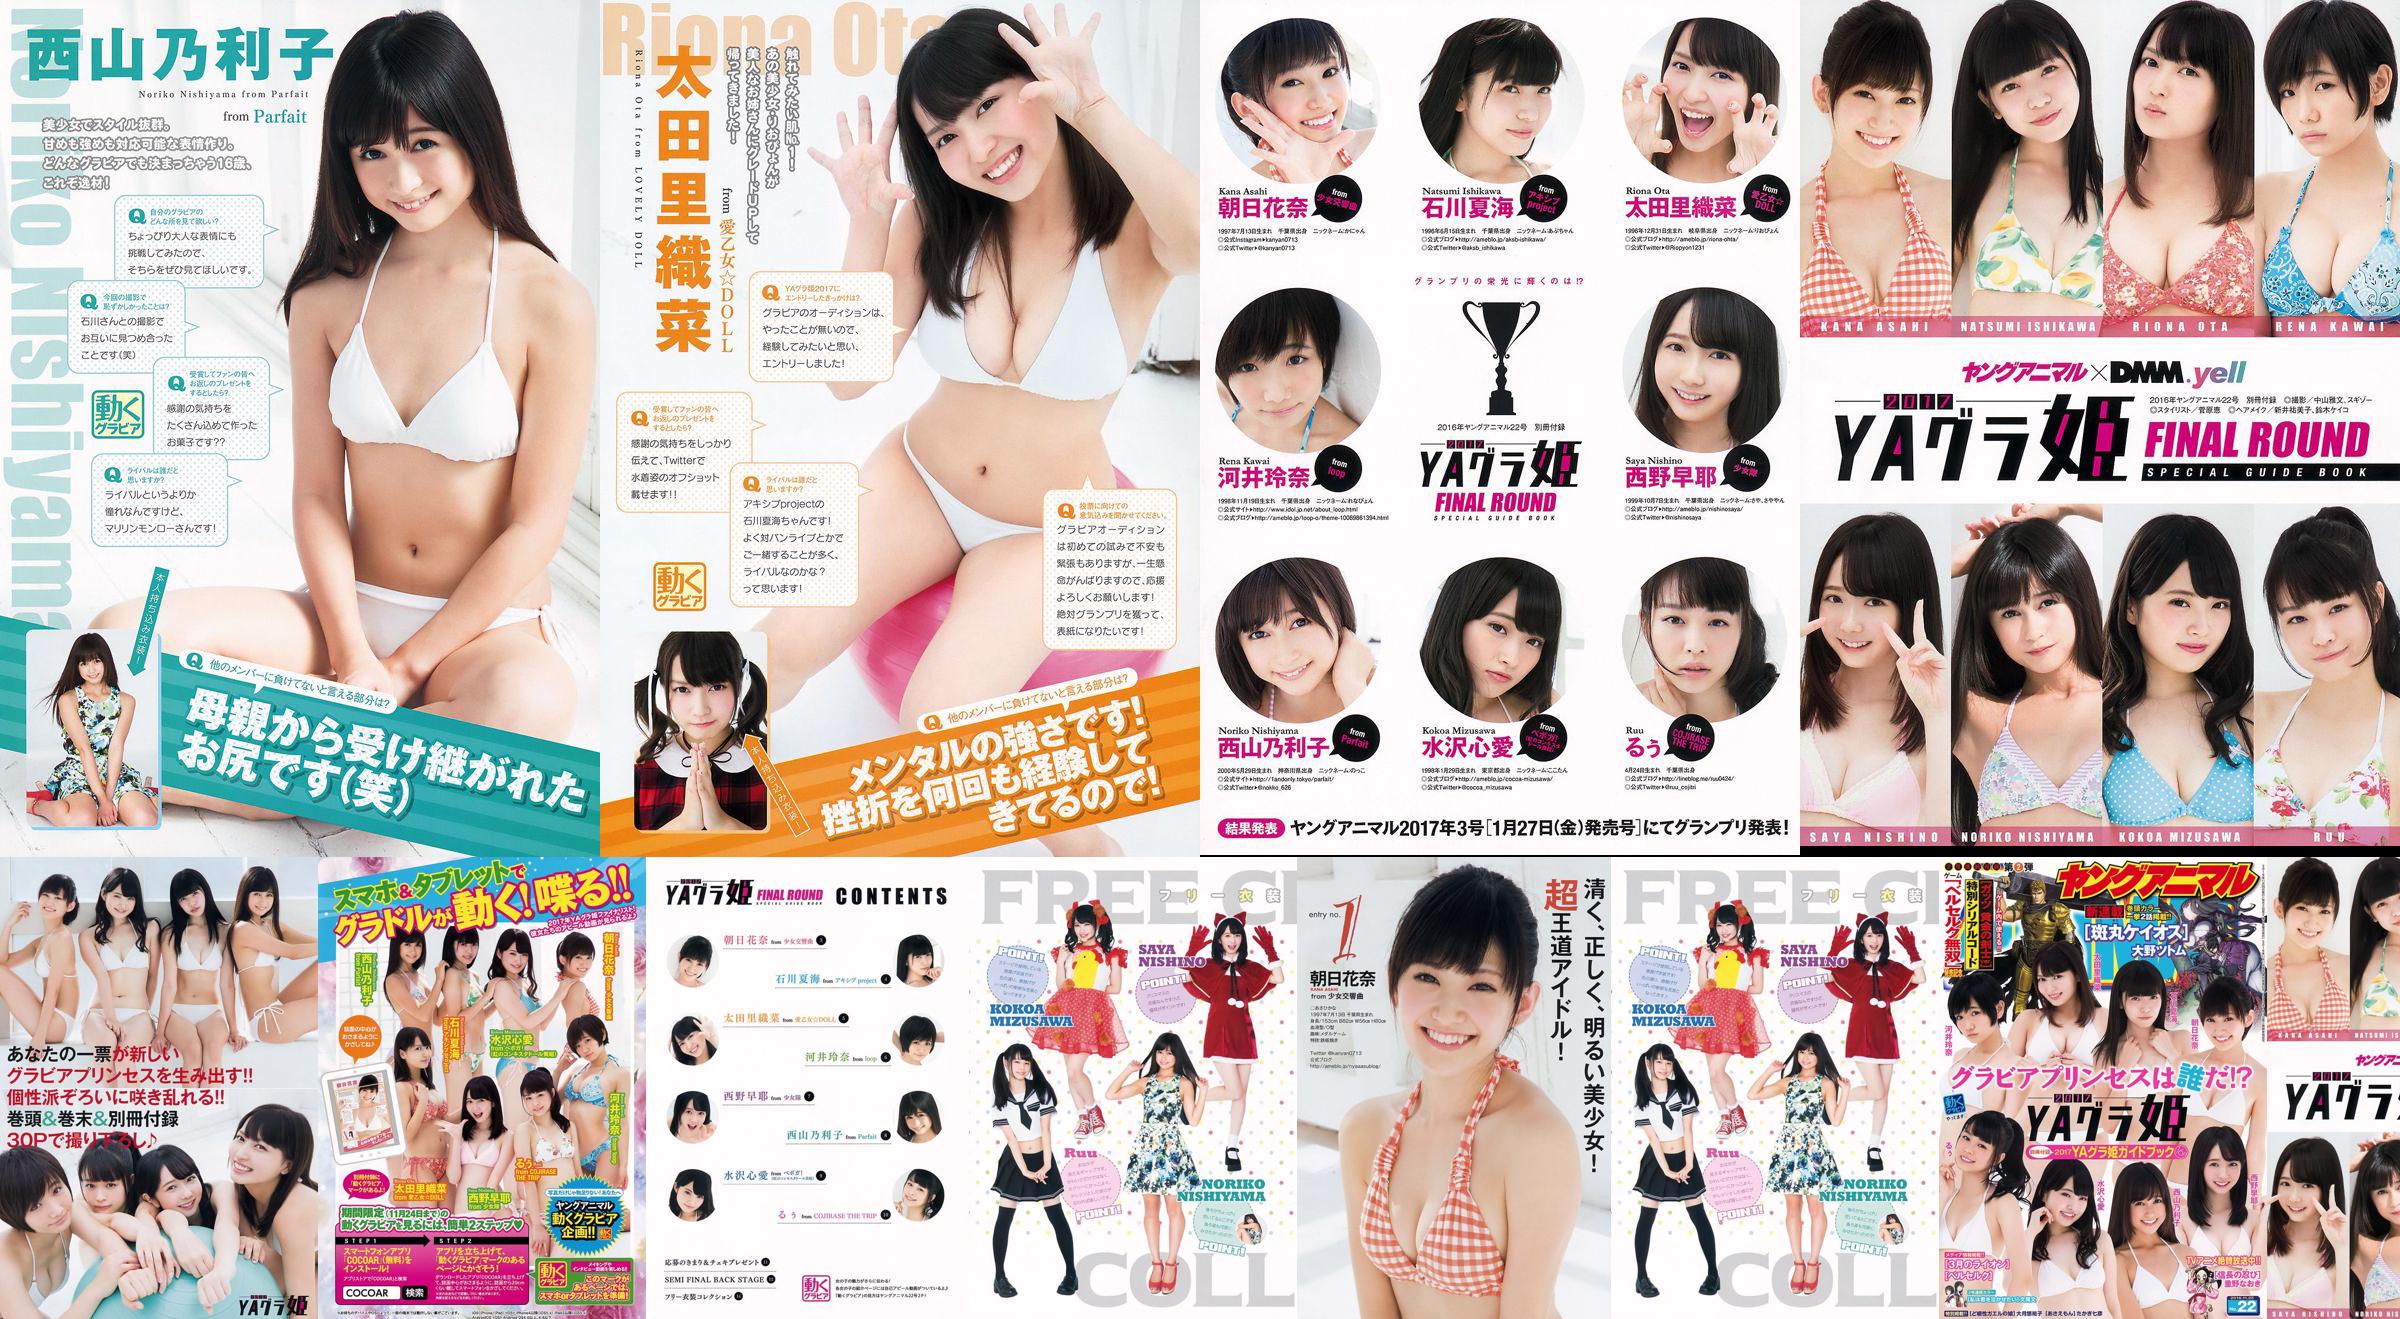 Mizusawa Beloved, Nishiyama Noriko, Nishino Haya, Kawai Reina, Ota Rina, Ishikawa Natsumi, Asahi Hana [น้องสัตว์] นิตยสารภาพถ่ายฉบับที่ 22 ประจำปี 2559 No.9c0cb2 หน้า 1